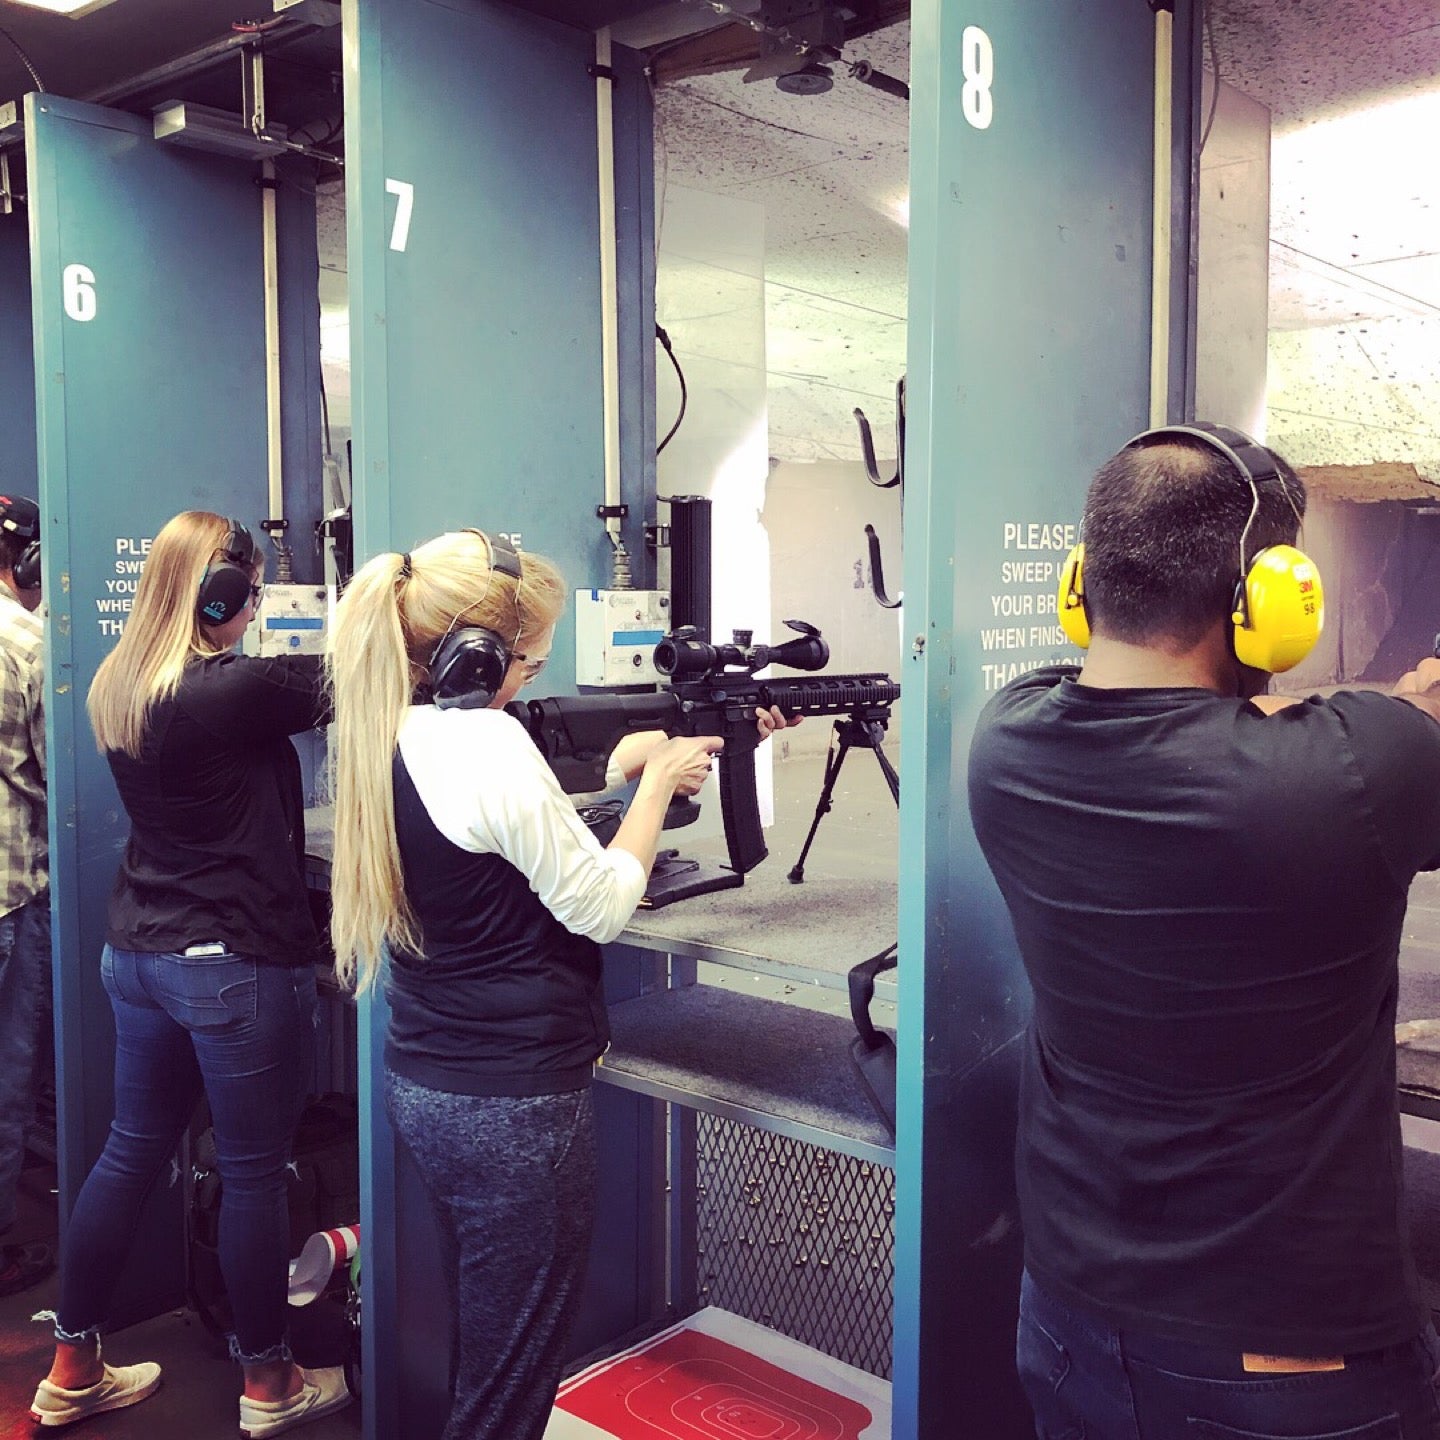 Pistol Range, Memphis Shooting Range